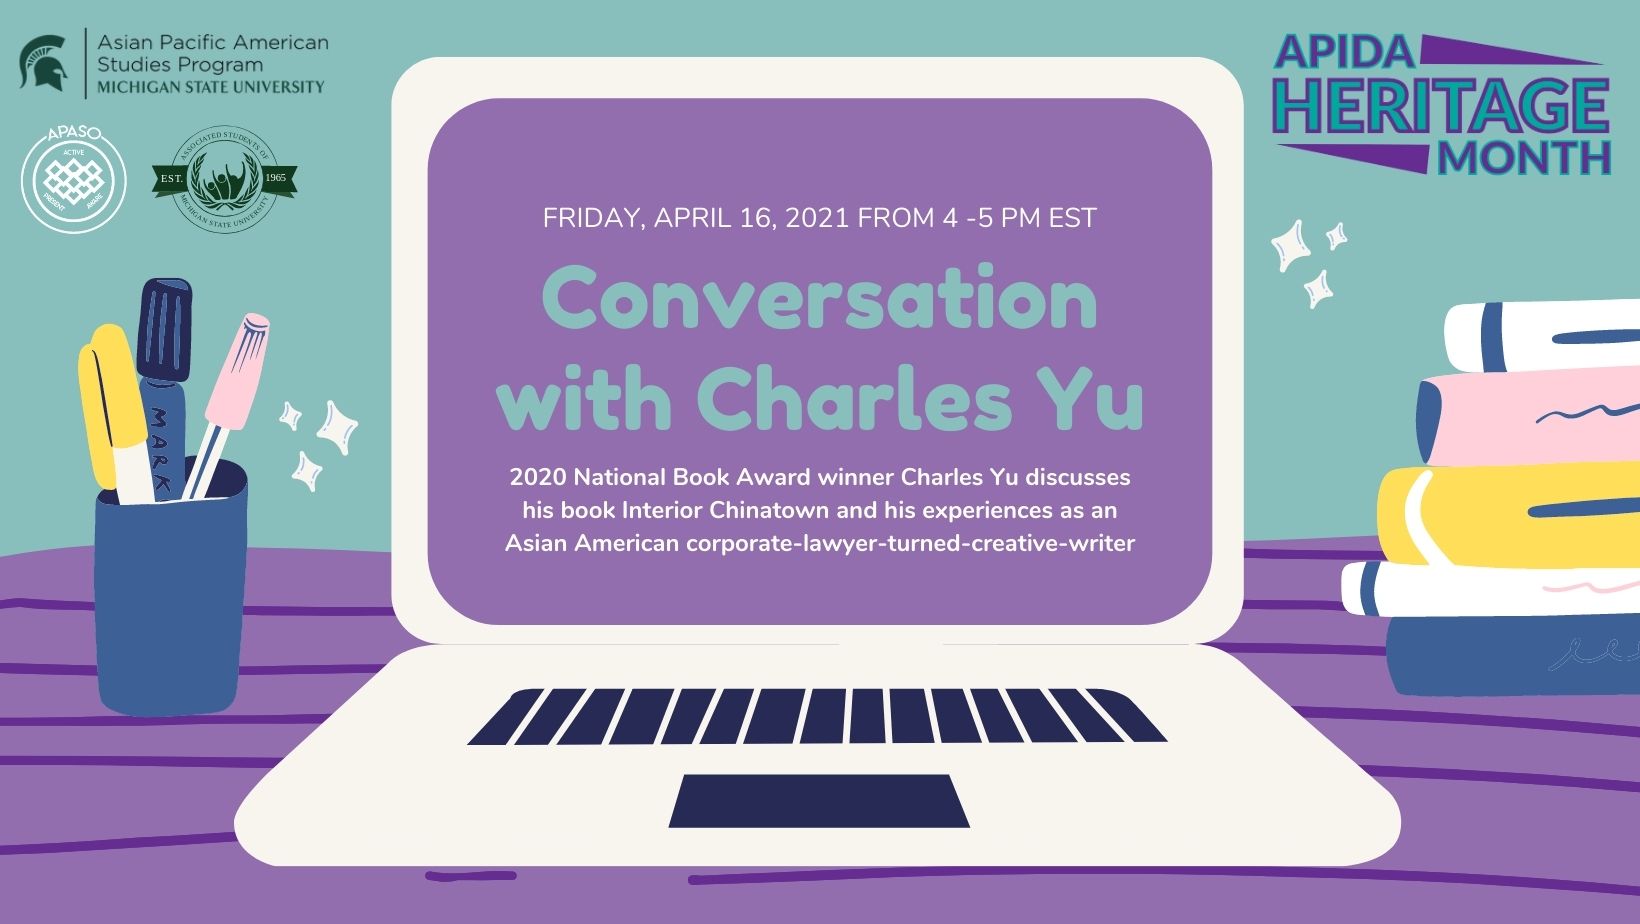 Charles Yu event flyer.